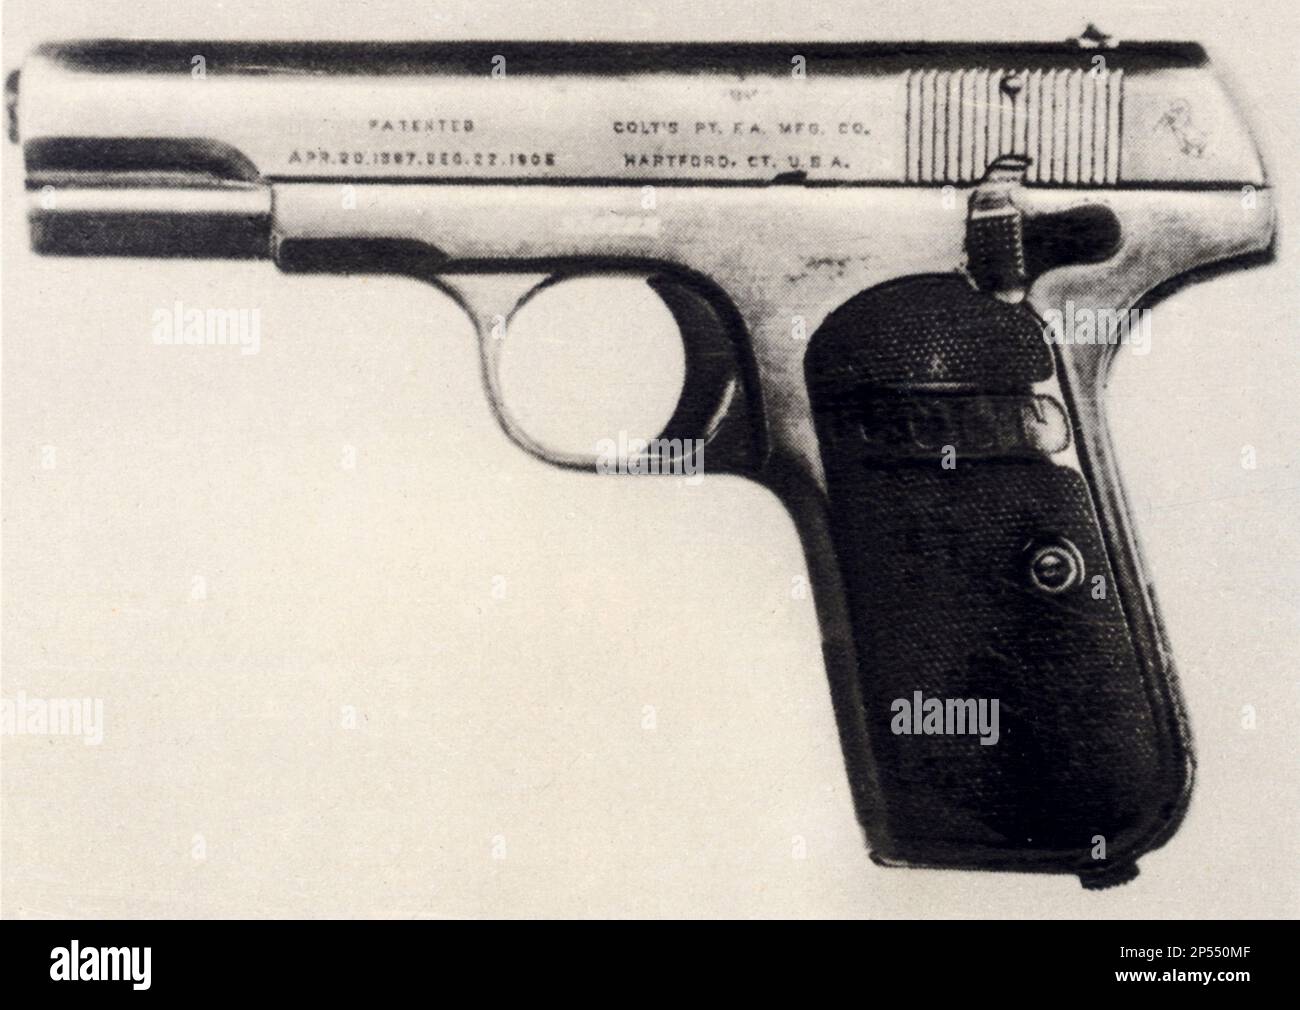 1920 c, Etats-Unis : le Colt se trouve dans la poche de Bartolomeo Vanzetti , photo de la police utilisée pour le procès de deux anachistes italiens NICOLA SACCO ( 1888 - 1927 ) et BARTOLOMEO VANZETTI ( 1891 - 1927 ) , Arrestation et mort aux Etats-Unis - ANARCHICI - ANARCHIA - ANARCHISME - arrestatti - connanati a morte - mort - SOCIALISMO - SOCIALISME - SOCIALISTA - SOCIALISTE - POLITICA - POLITIQUE - processo - arma - canon - pistolet - pistola - Archivio GBB Banque D'Images